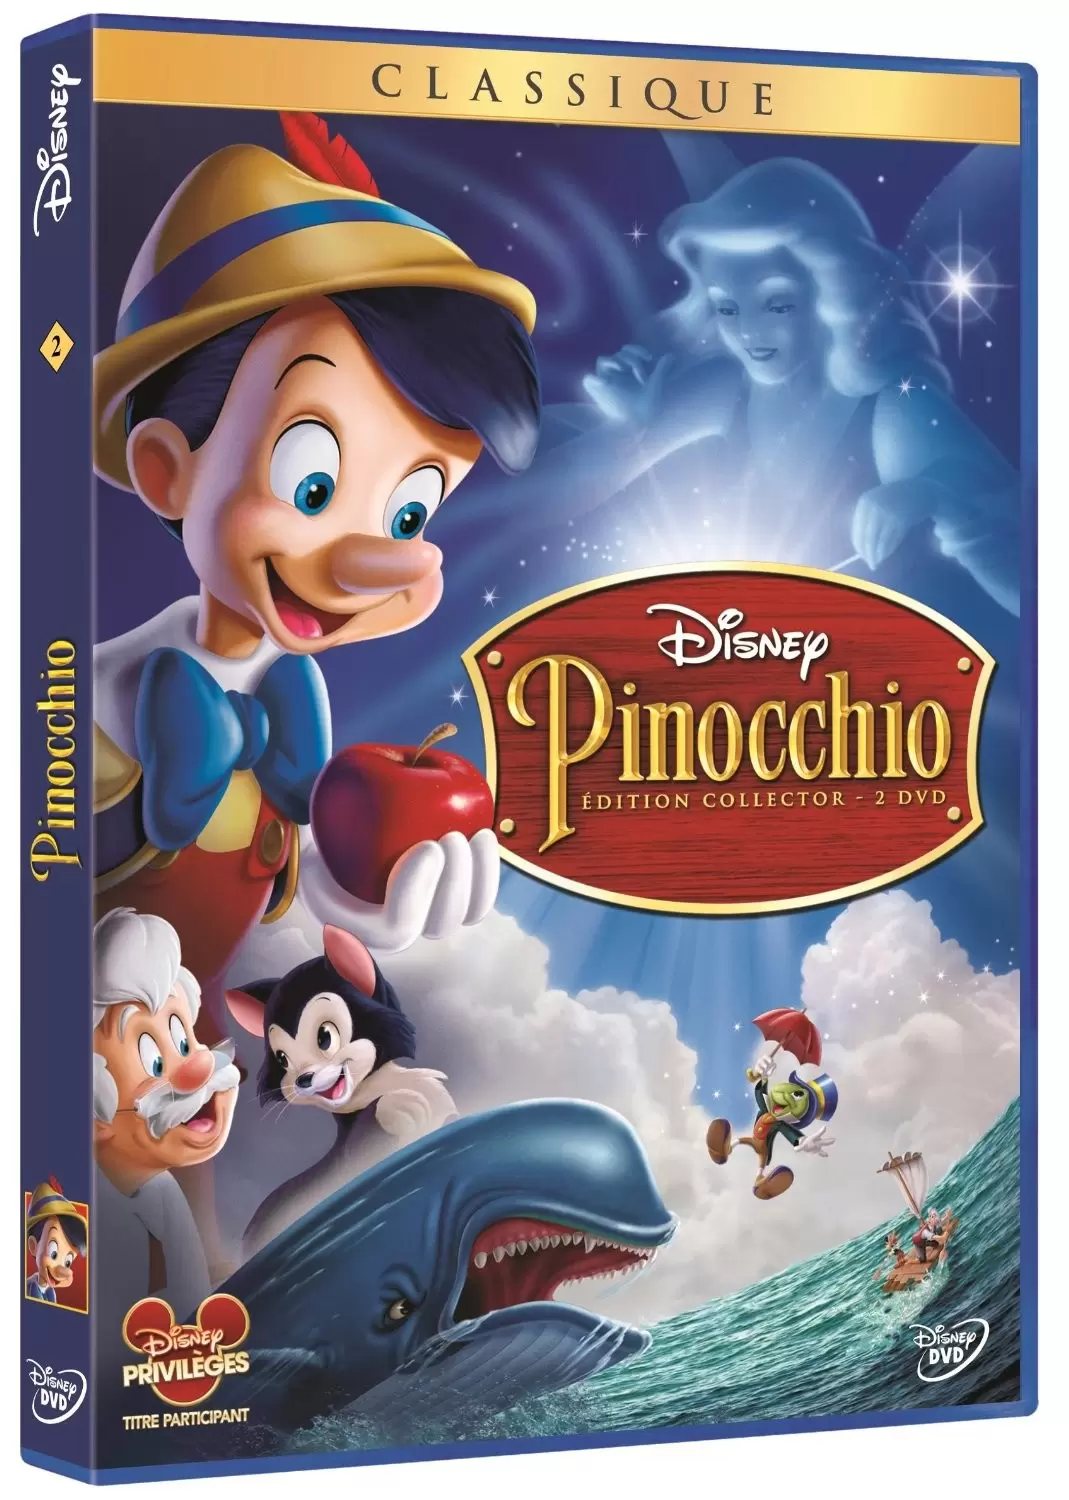 Les grands classiques de Disney en DVD - Pinocchio